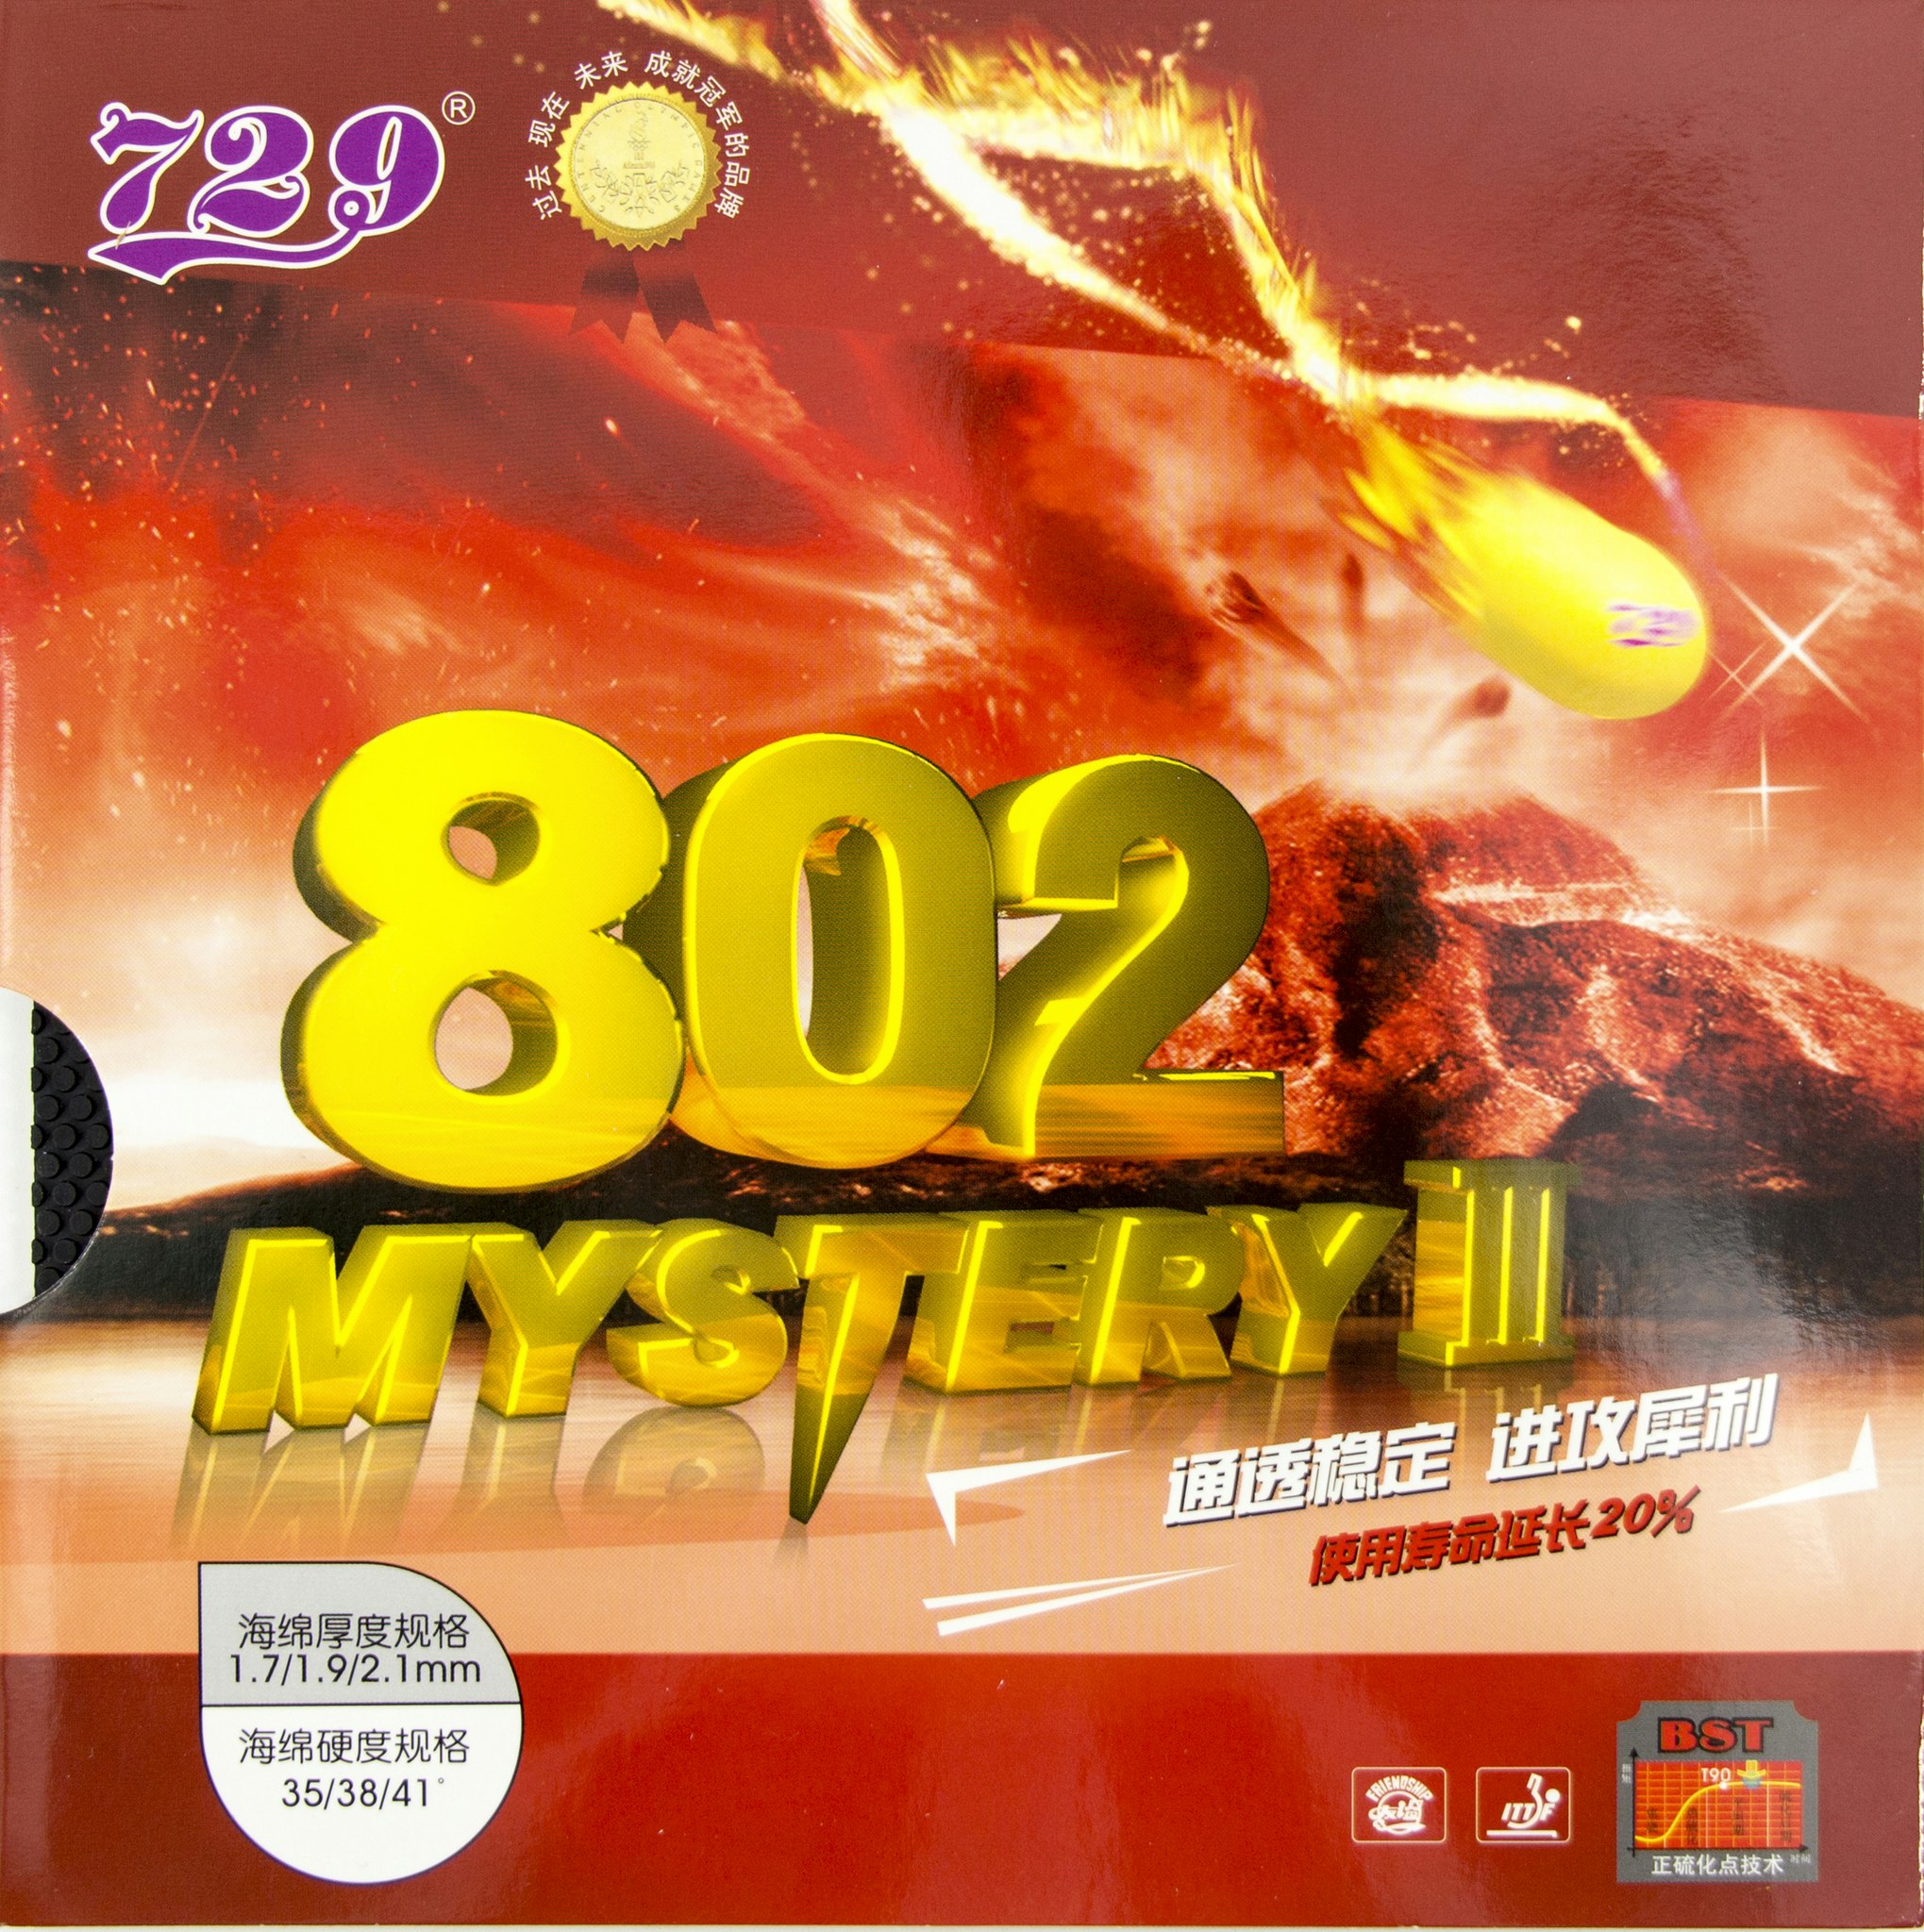 729 - Mystery III 802